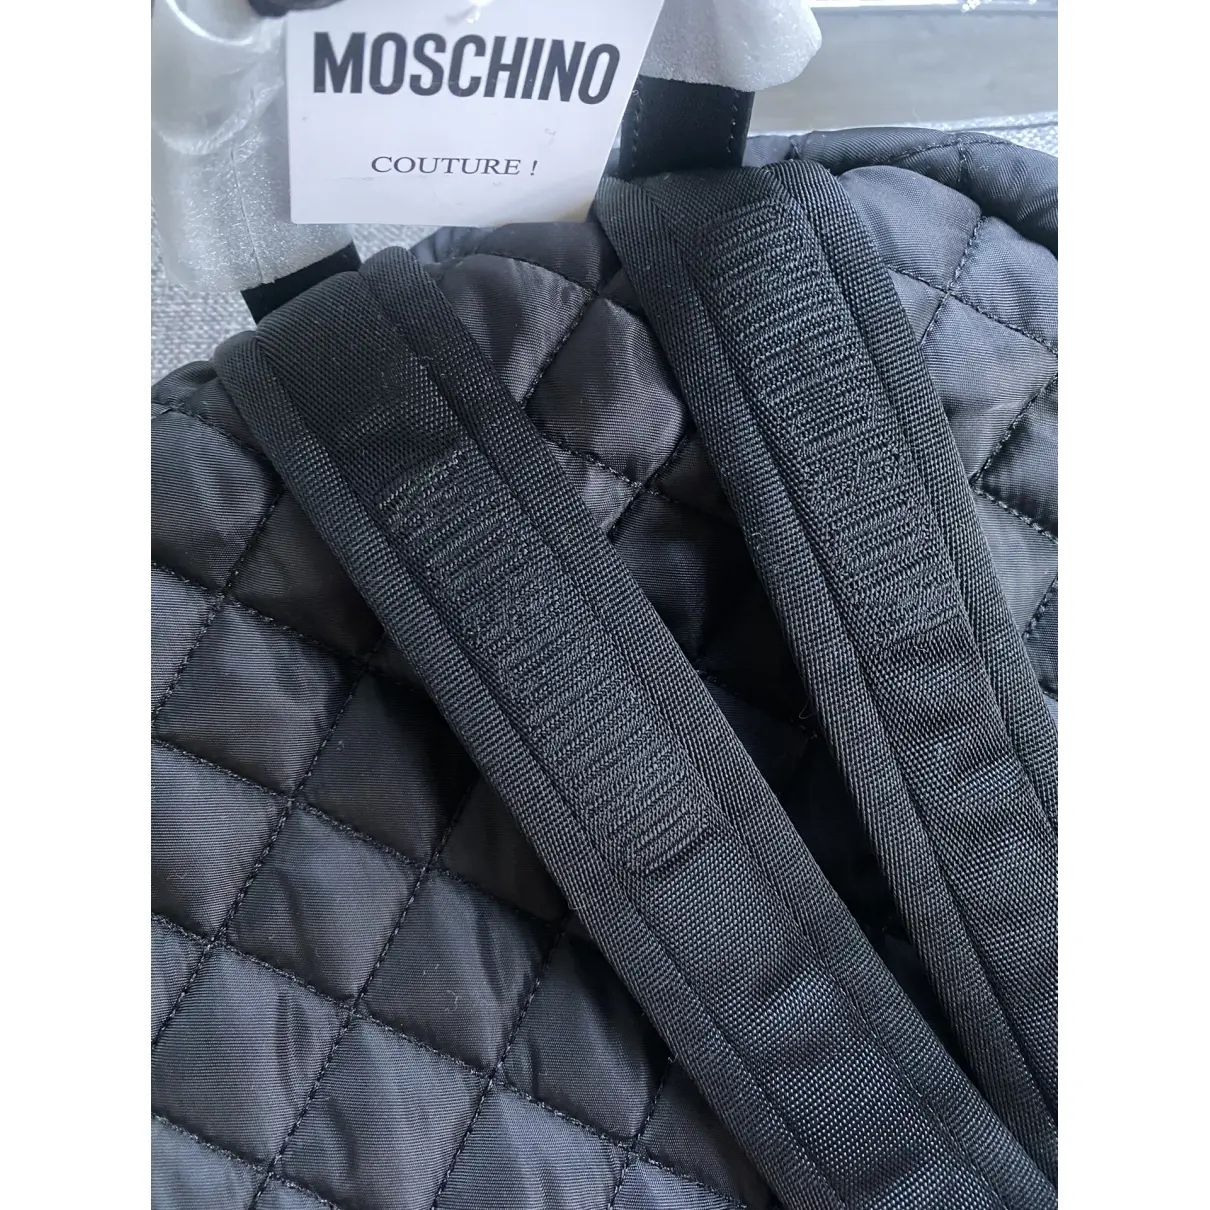 Backpack Moschino